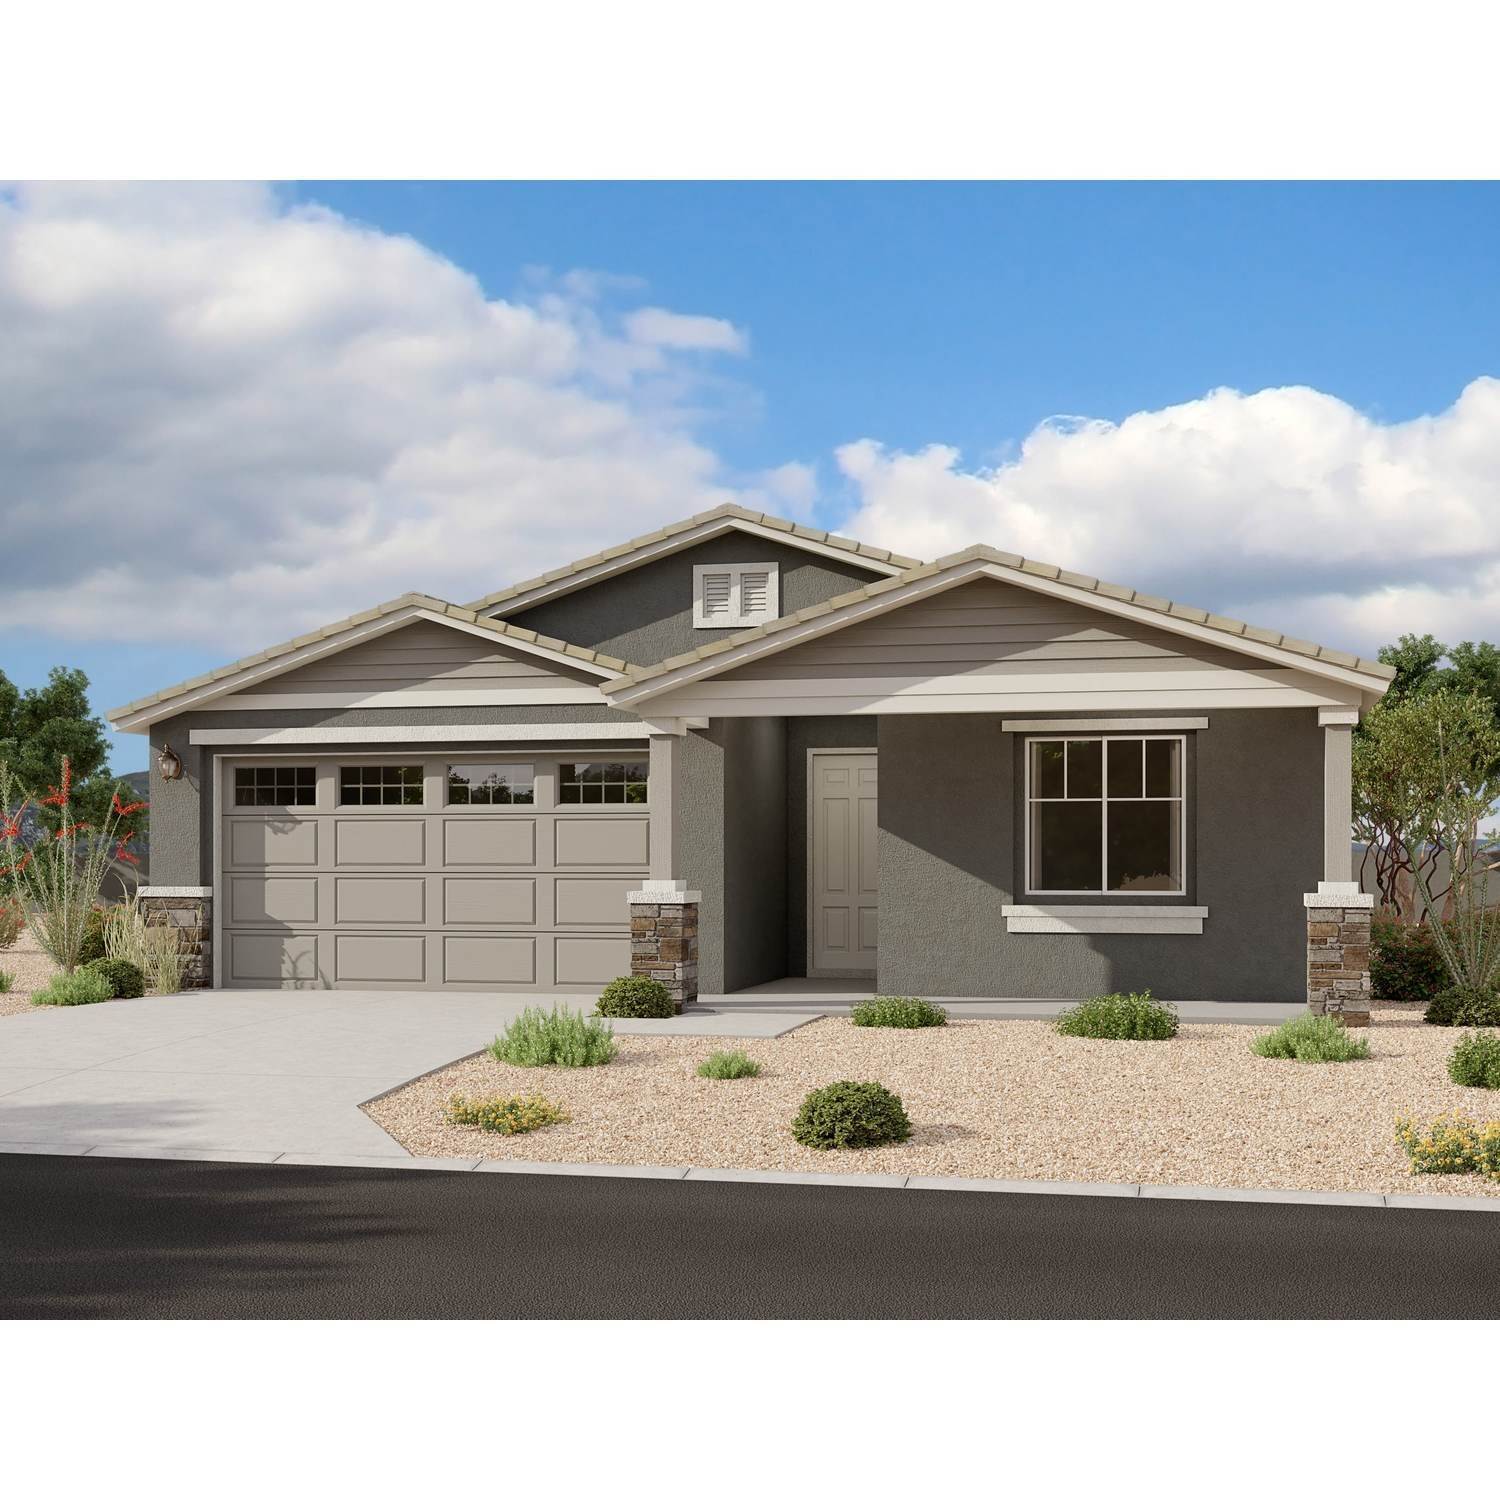 Single Family for Sale at Destination At Gateway 6061 South Oxley, Mesa, AZ 85212